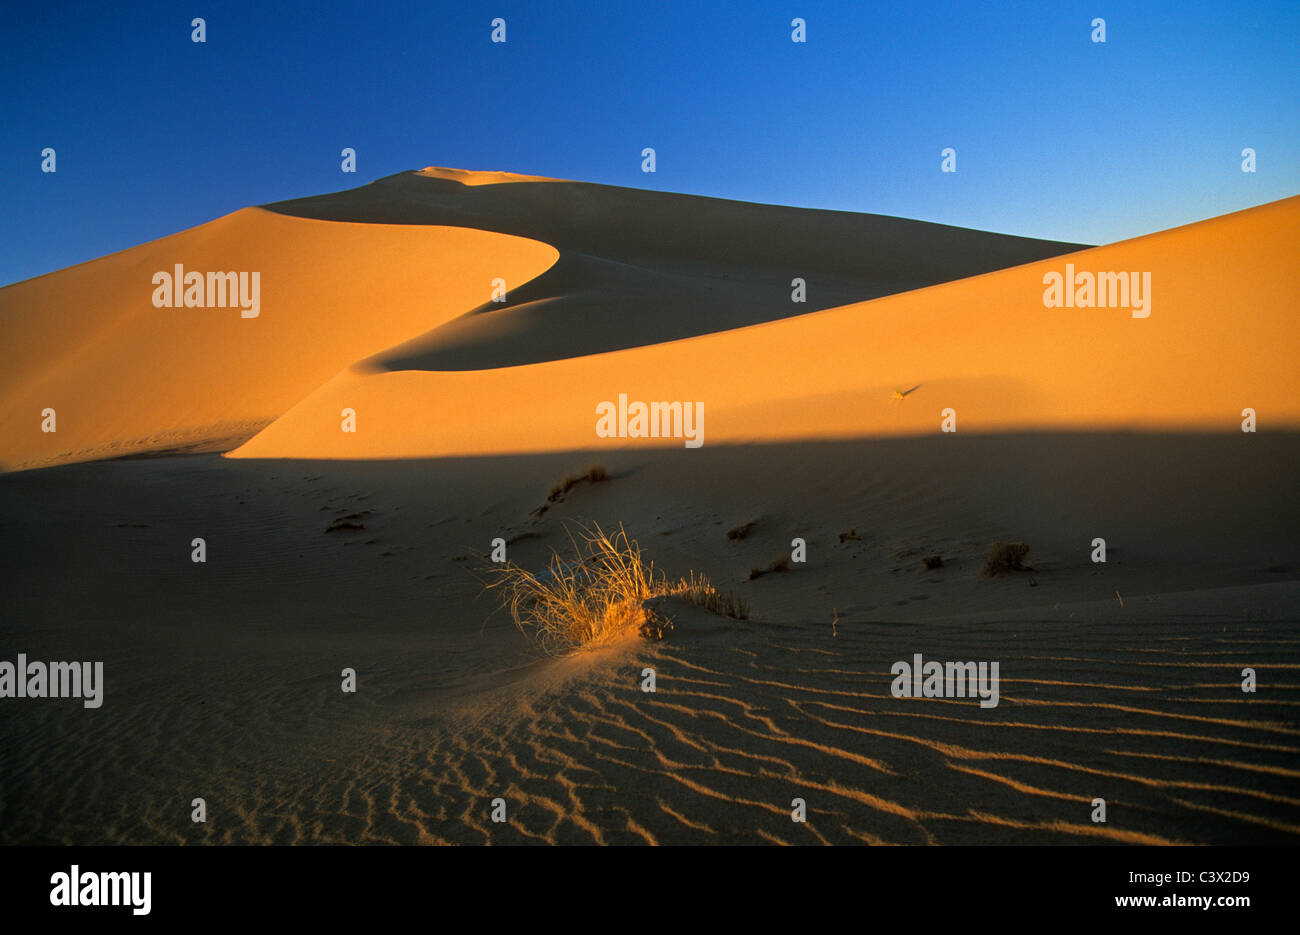 Algeria, Djanet, Sahara dessert, plant surviving in sand. Sand dunes. Stock Photo